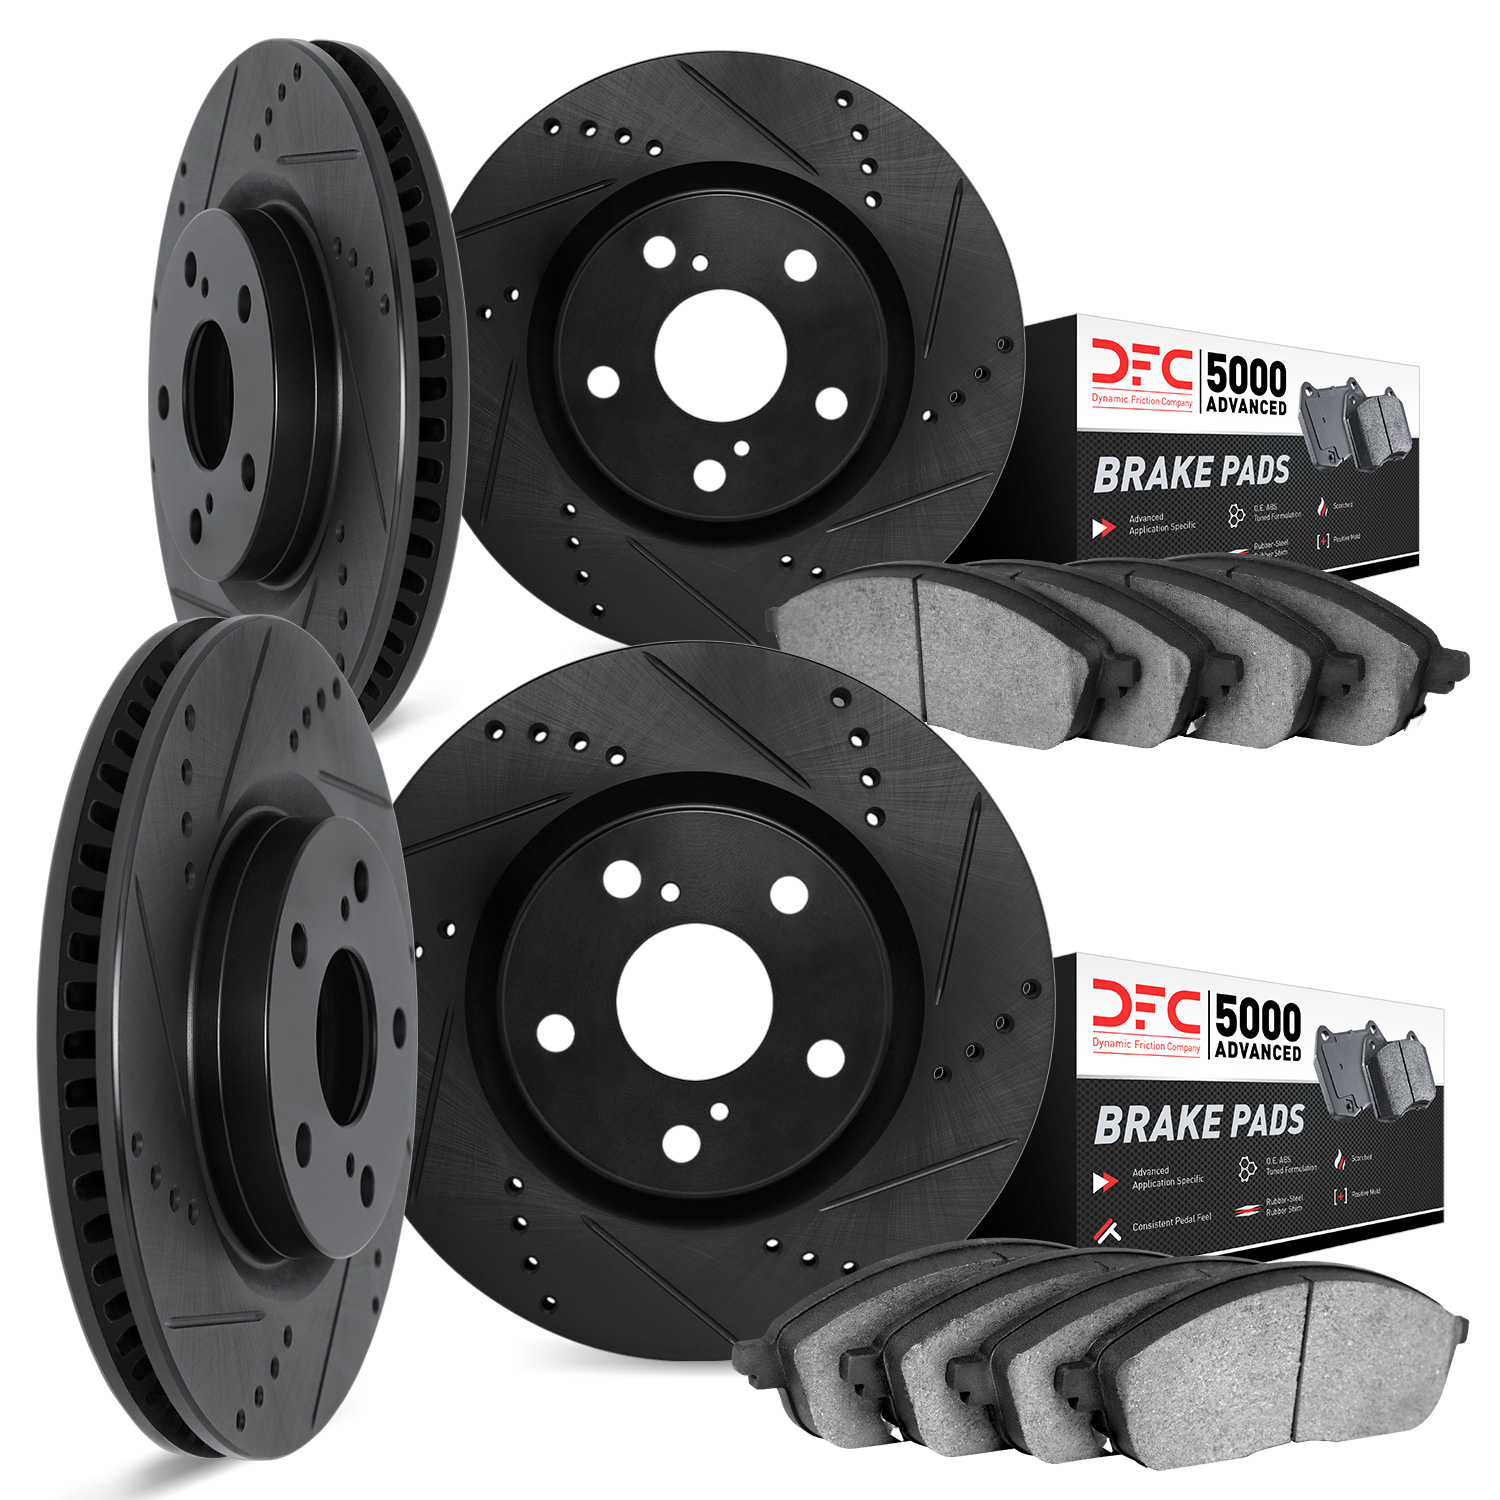 8504-40240 Drilled/Slotted Brake Rotors w/5000 Advanced Brake Pads Kit [Black], 2003-2003 Mopar, Position: Front and Rear